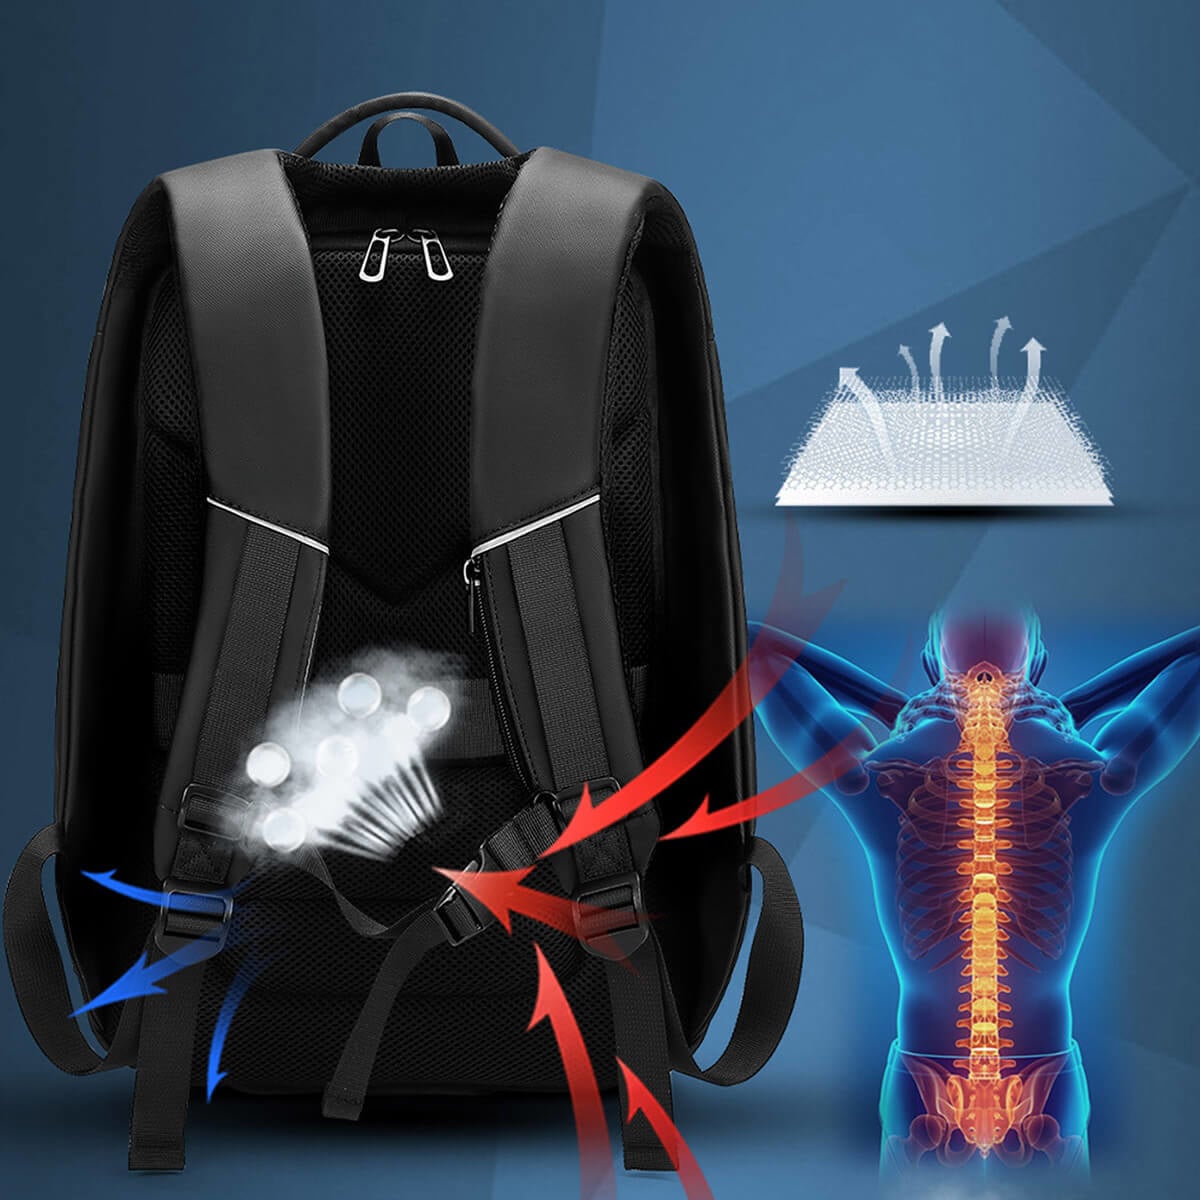 Breathable back design of waterproof laptop backpack